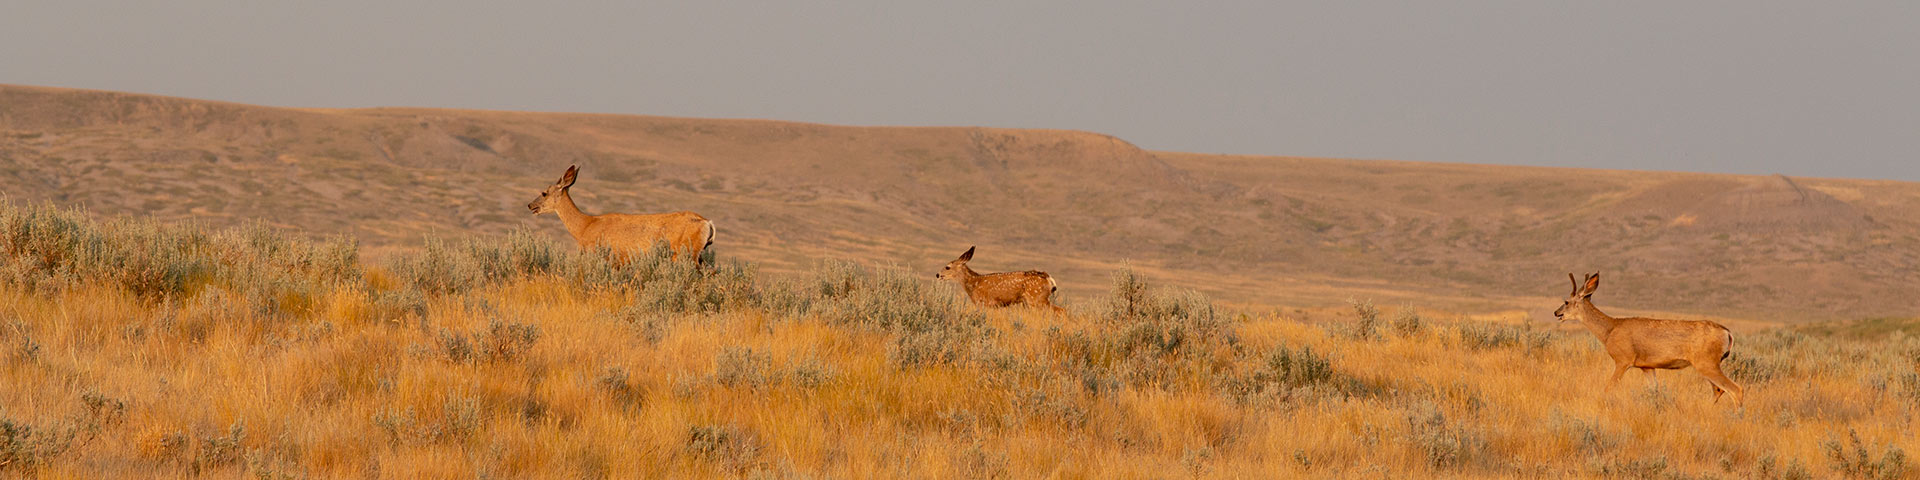 Several deer walking in the long grass in Grasslands National Park